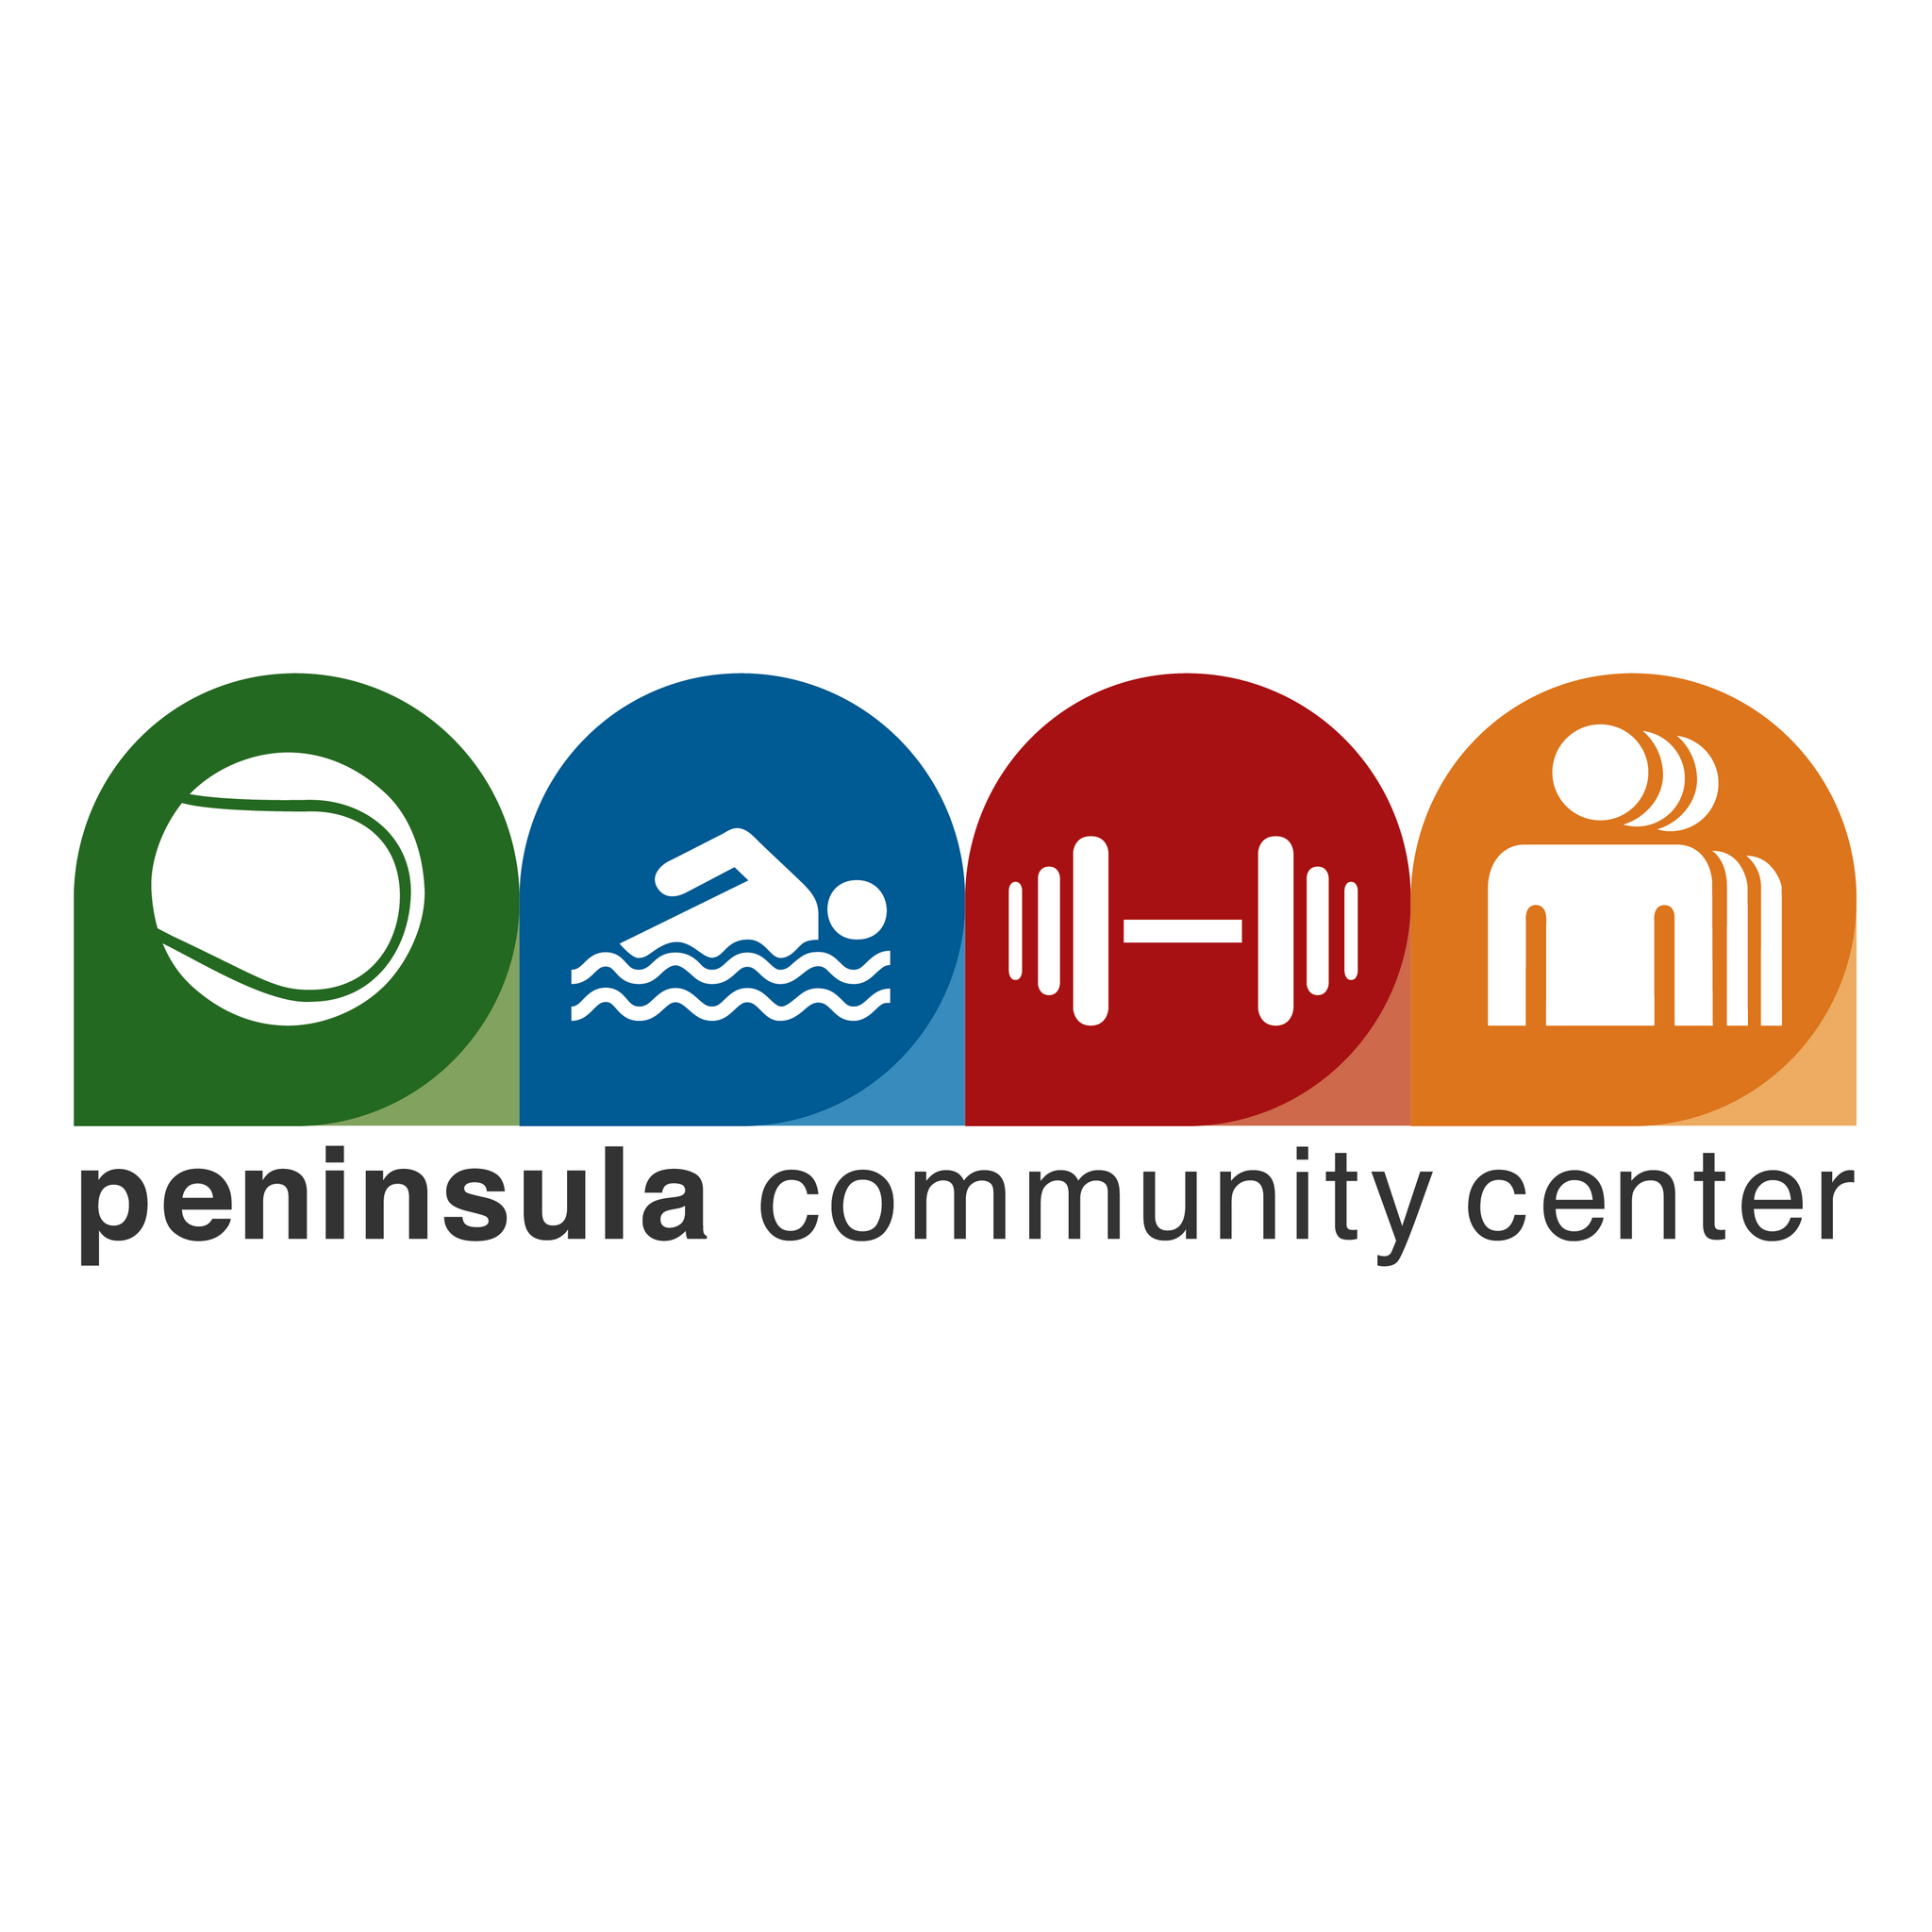 Center Pool Party  Peninsula Community Center